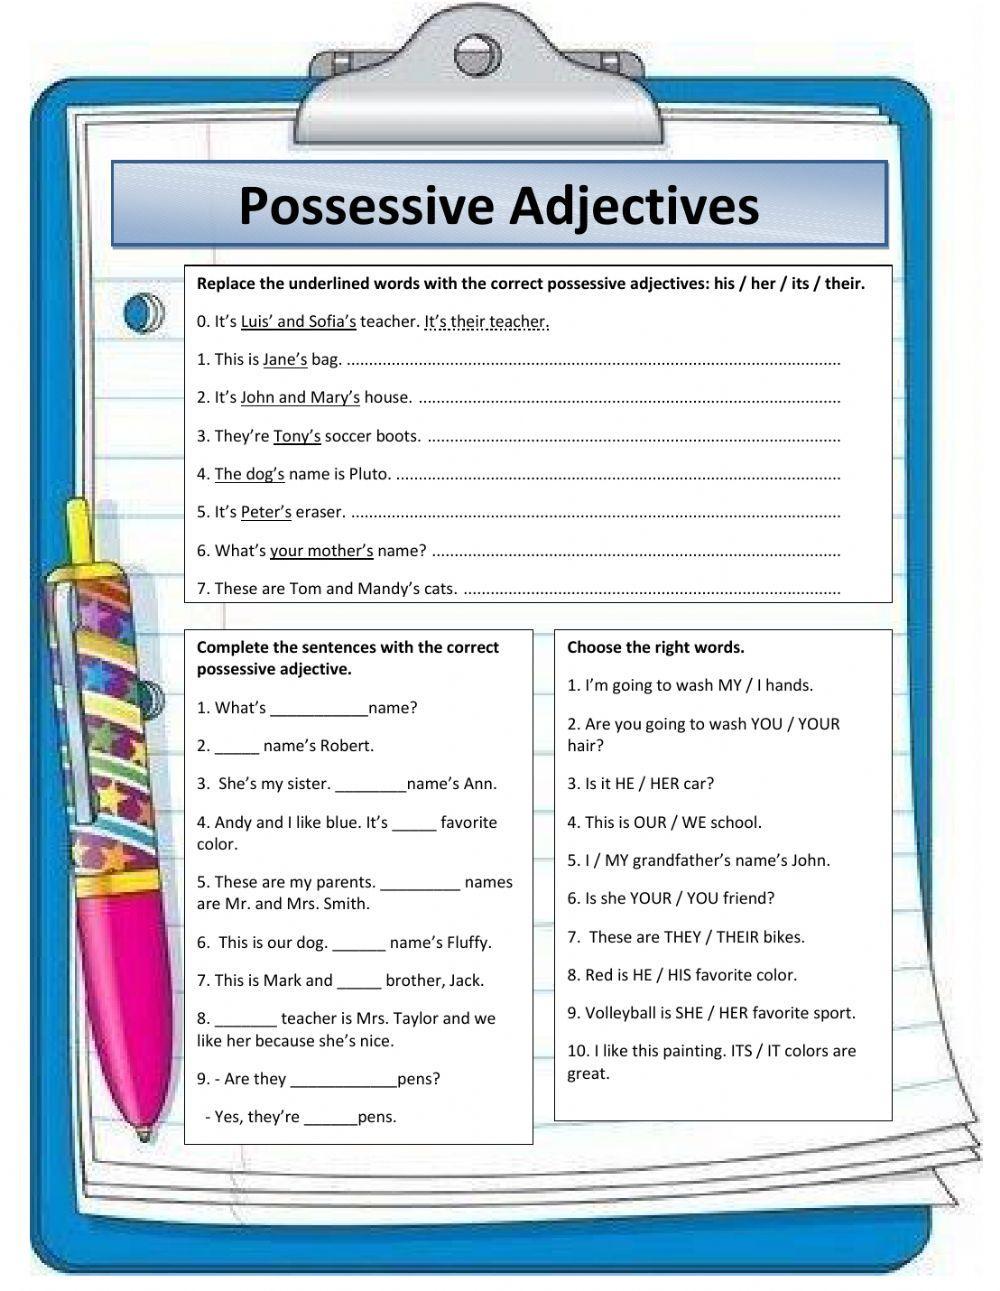 Possesive adjectives